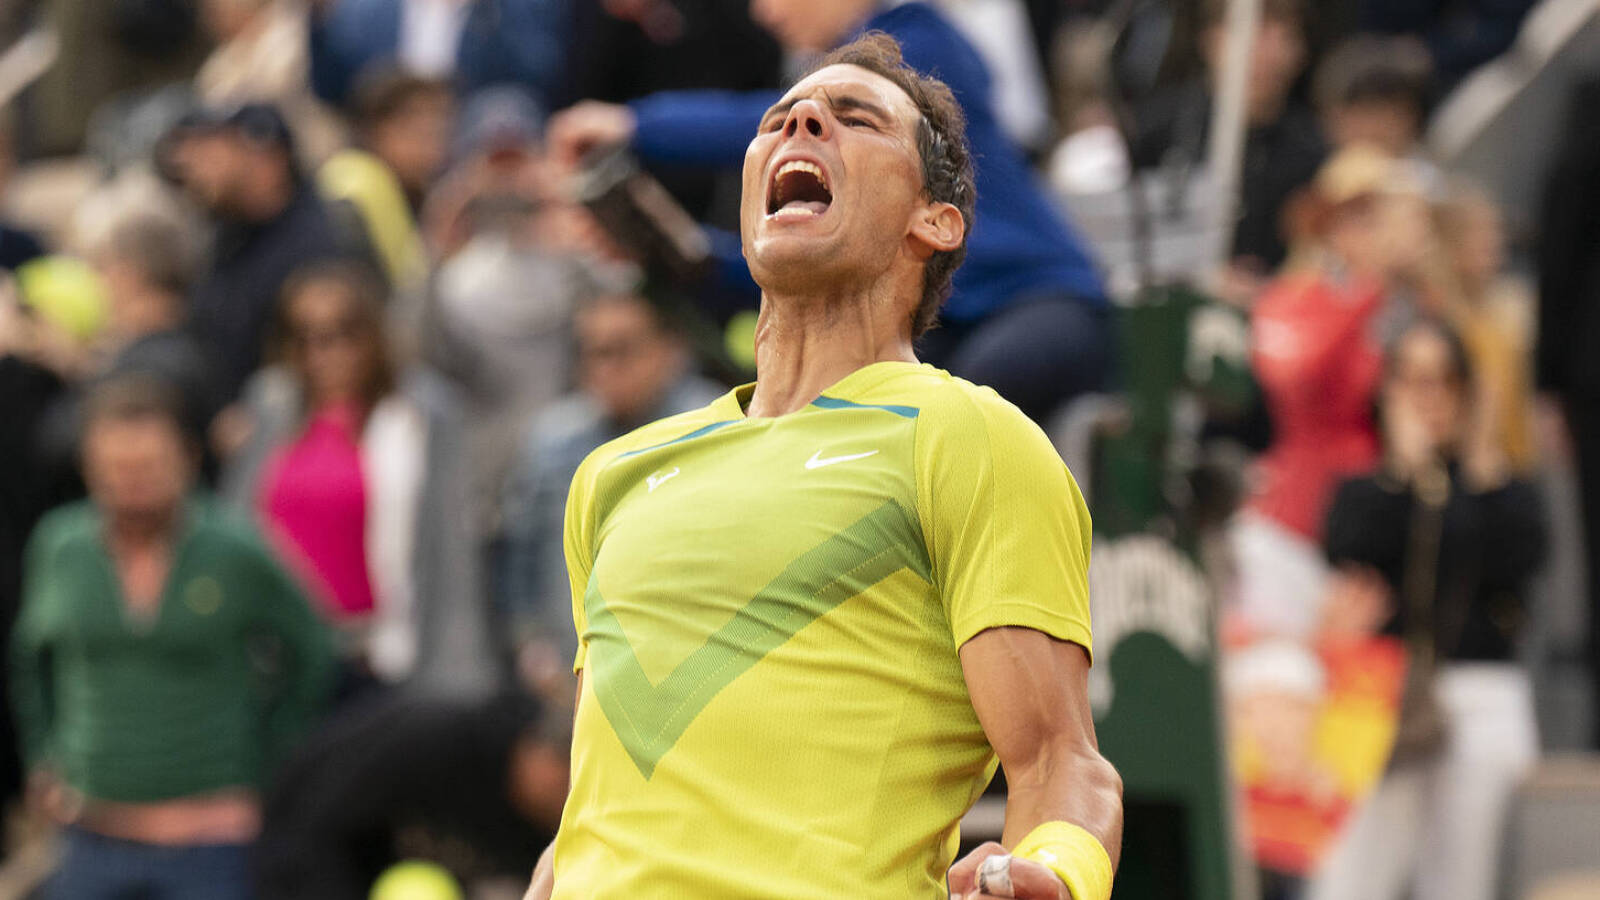 Rafael Nadal beats Novak Djokovic in French Open quarterfinals | Yardbarker